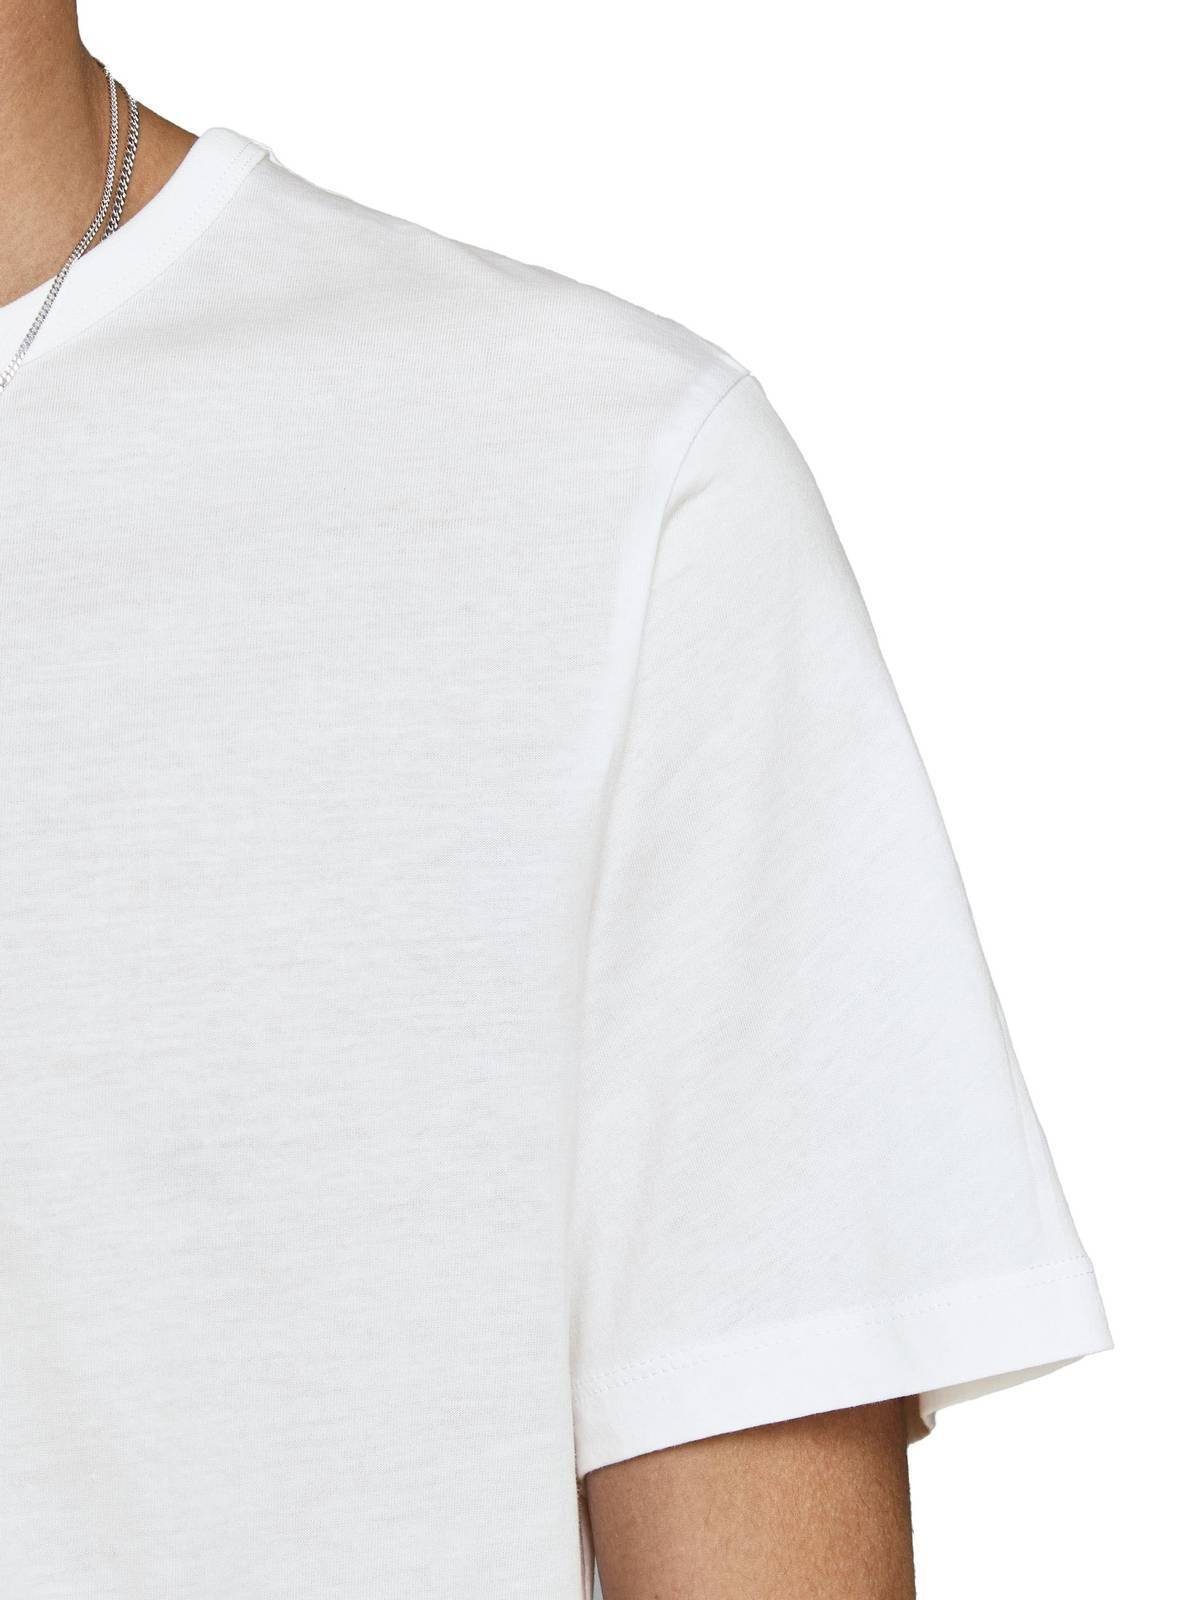 Jack Weiß T-Shirt, CREW TEE Herren T-Shirt - NECK JACBASIC & Jones 4er Pack